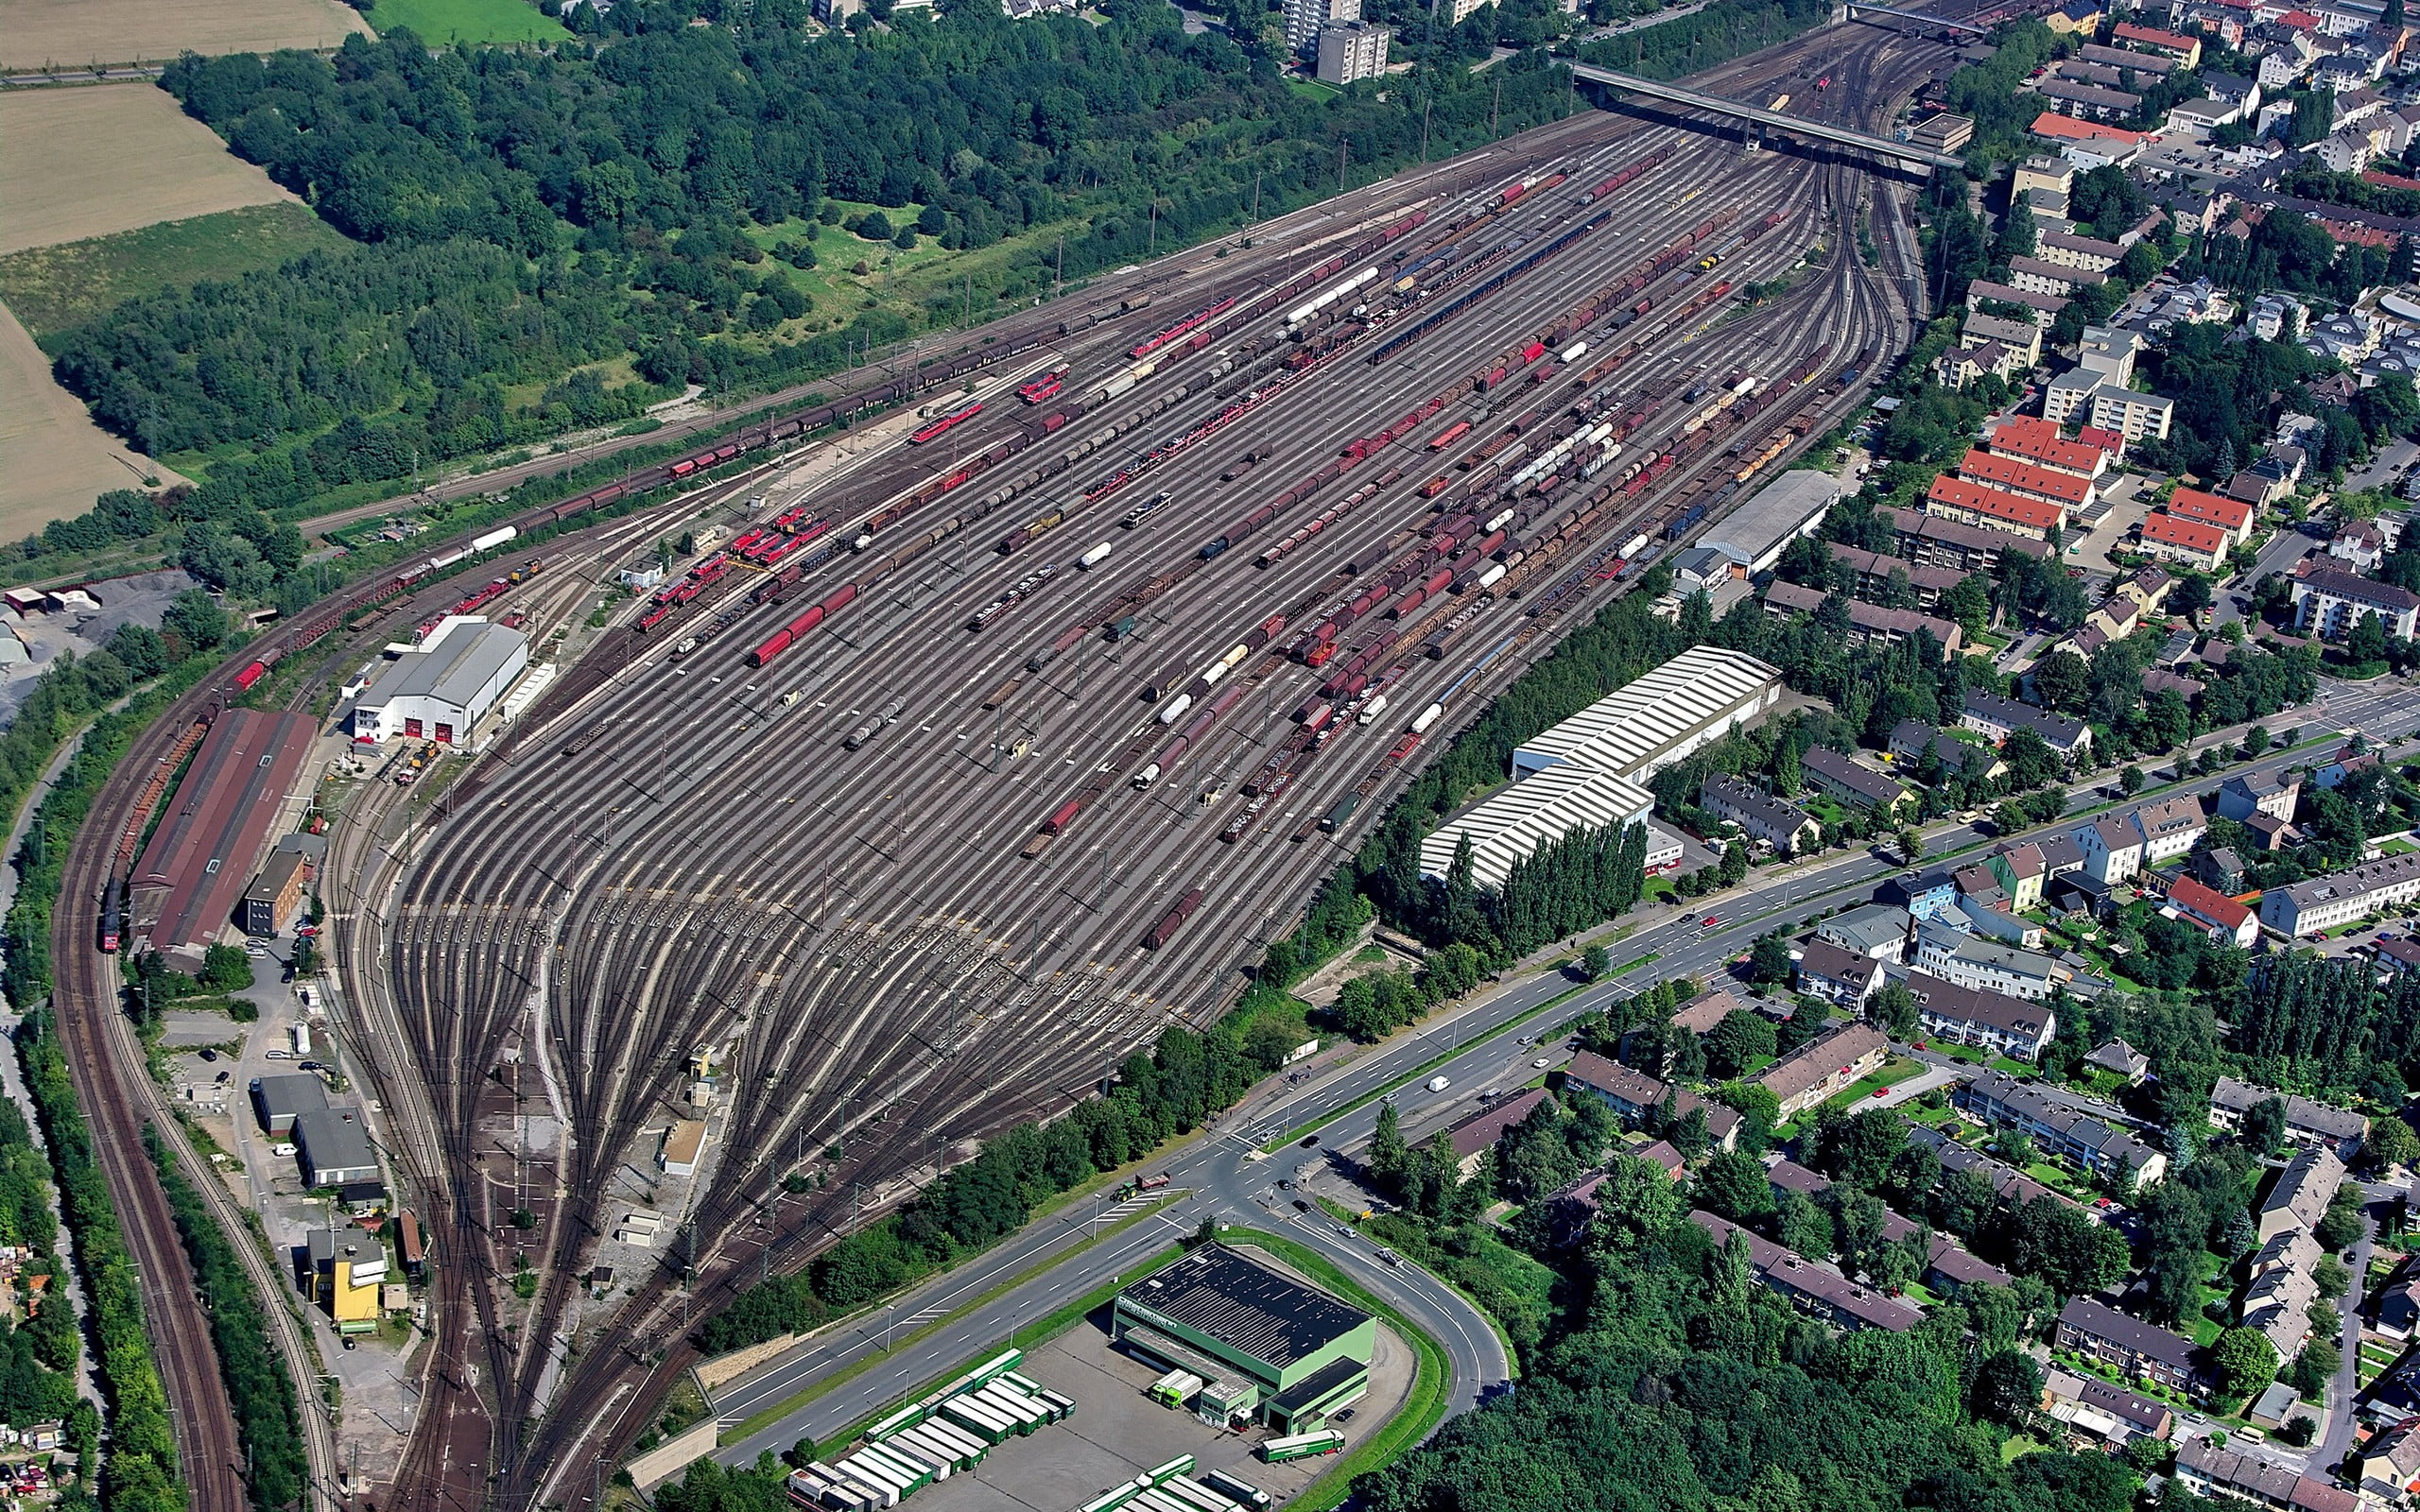 asphalt road, train, rail yard, city, aerial view, high angle view